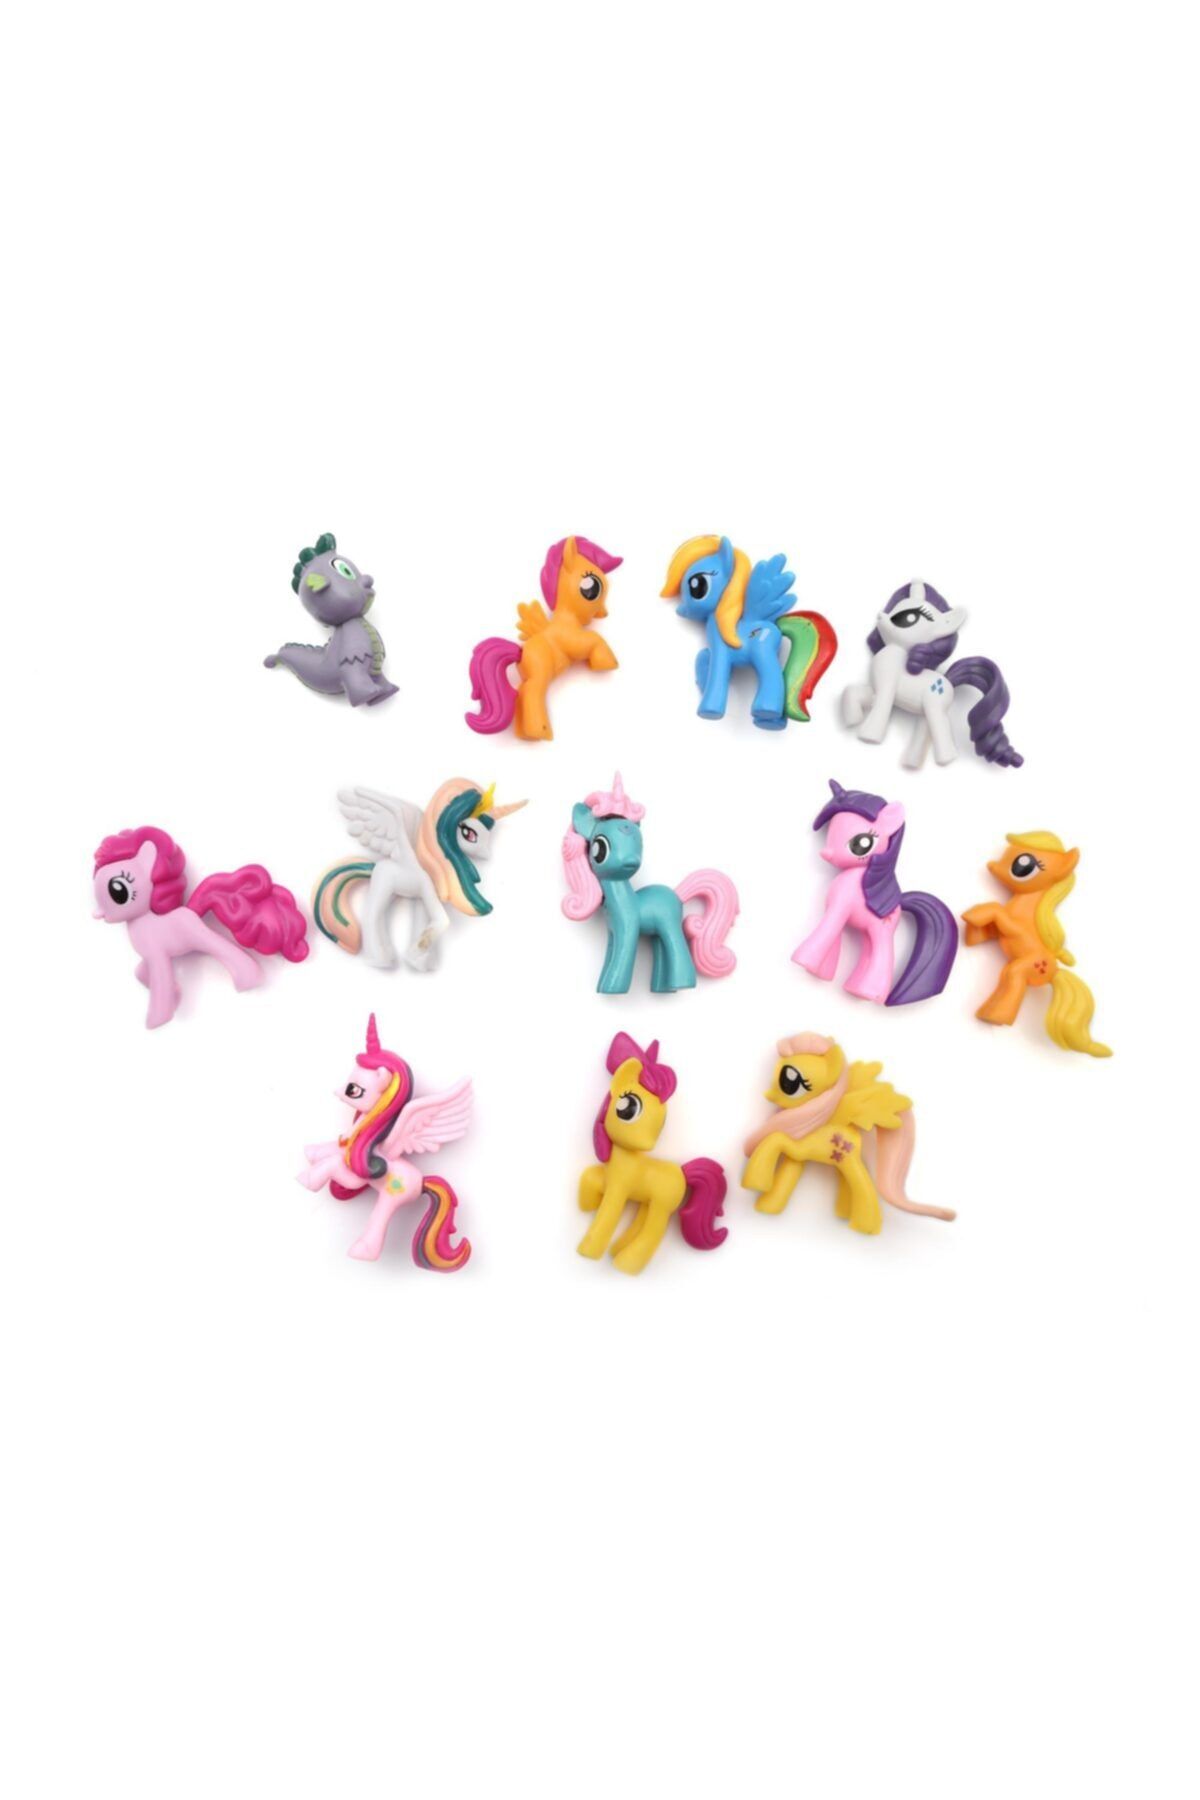 Mashotrend 12 Parça My Little Pony Figür Seti - Benim Sevgili Atlarım Seti - Renkli Atlar - Equestria Girl